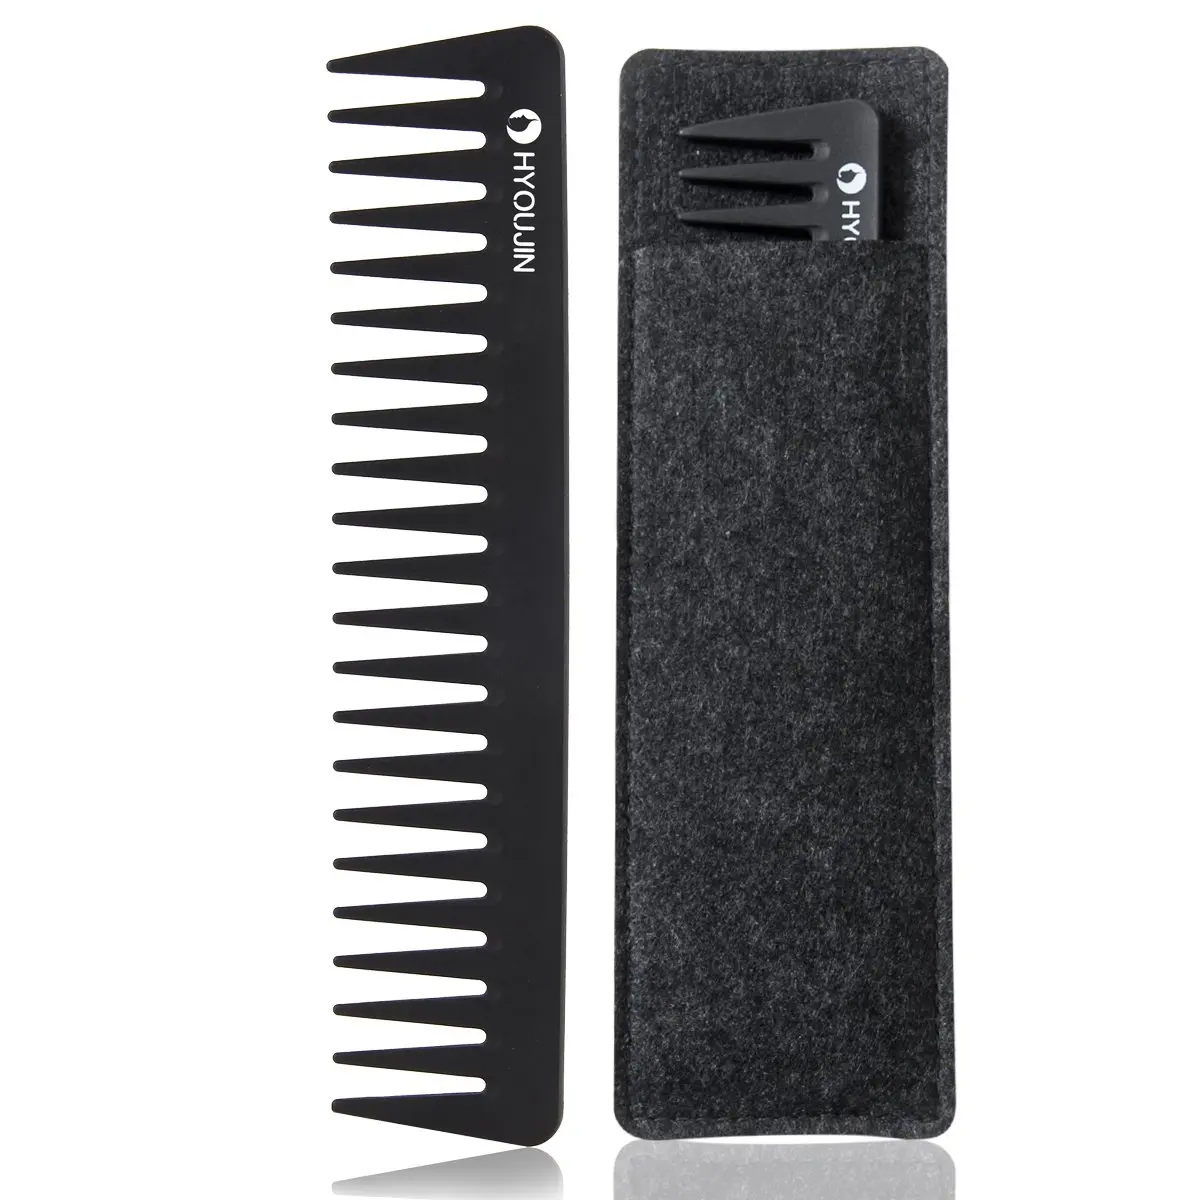 100 гребень. Carbon hair Comb. Расческа Laf. MKH 601 Black.